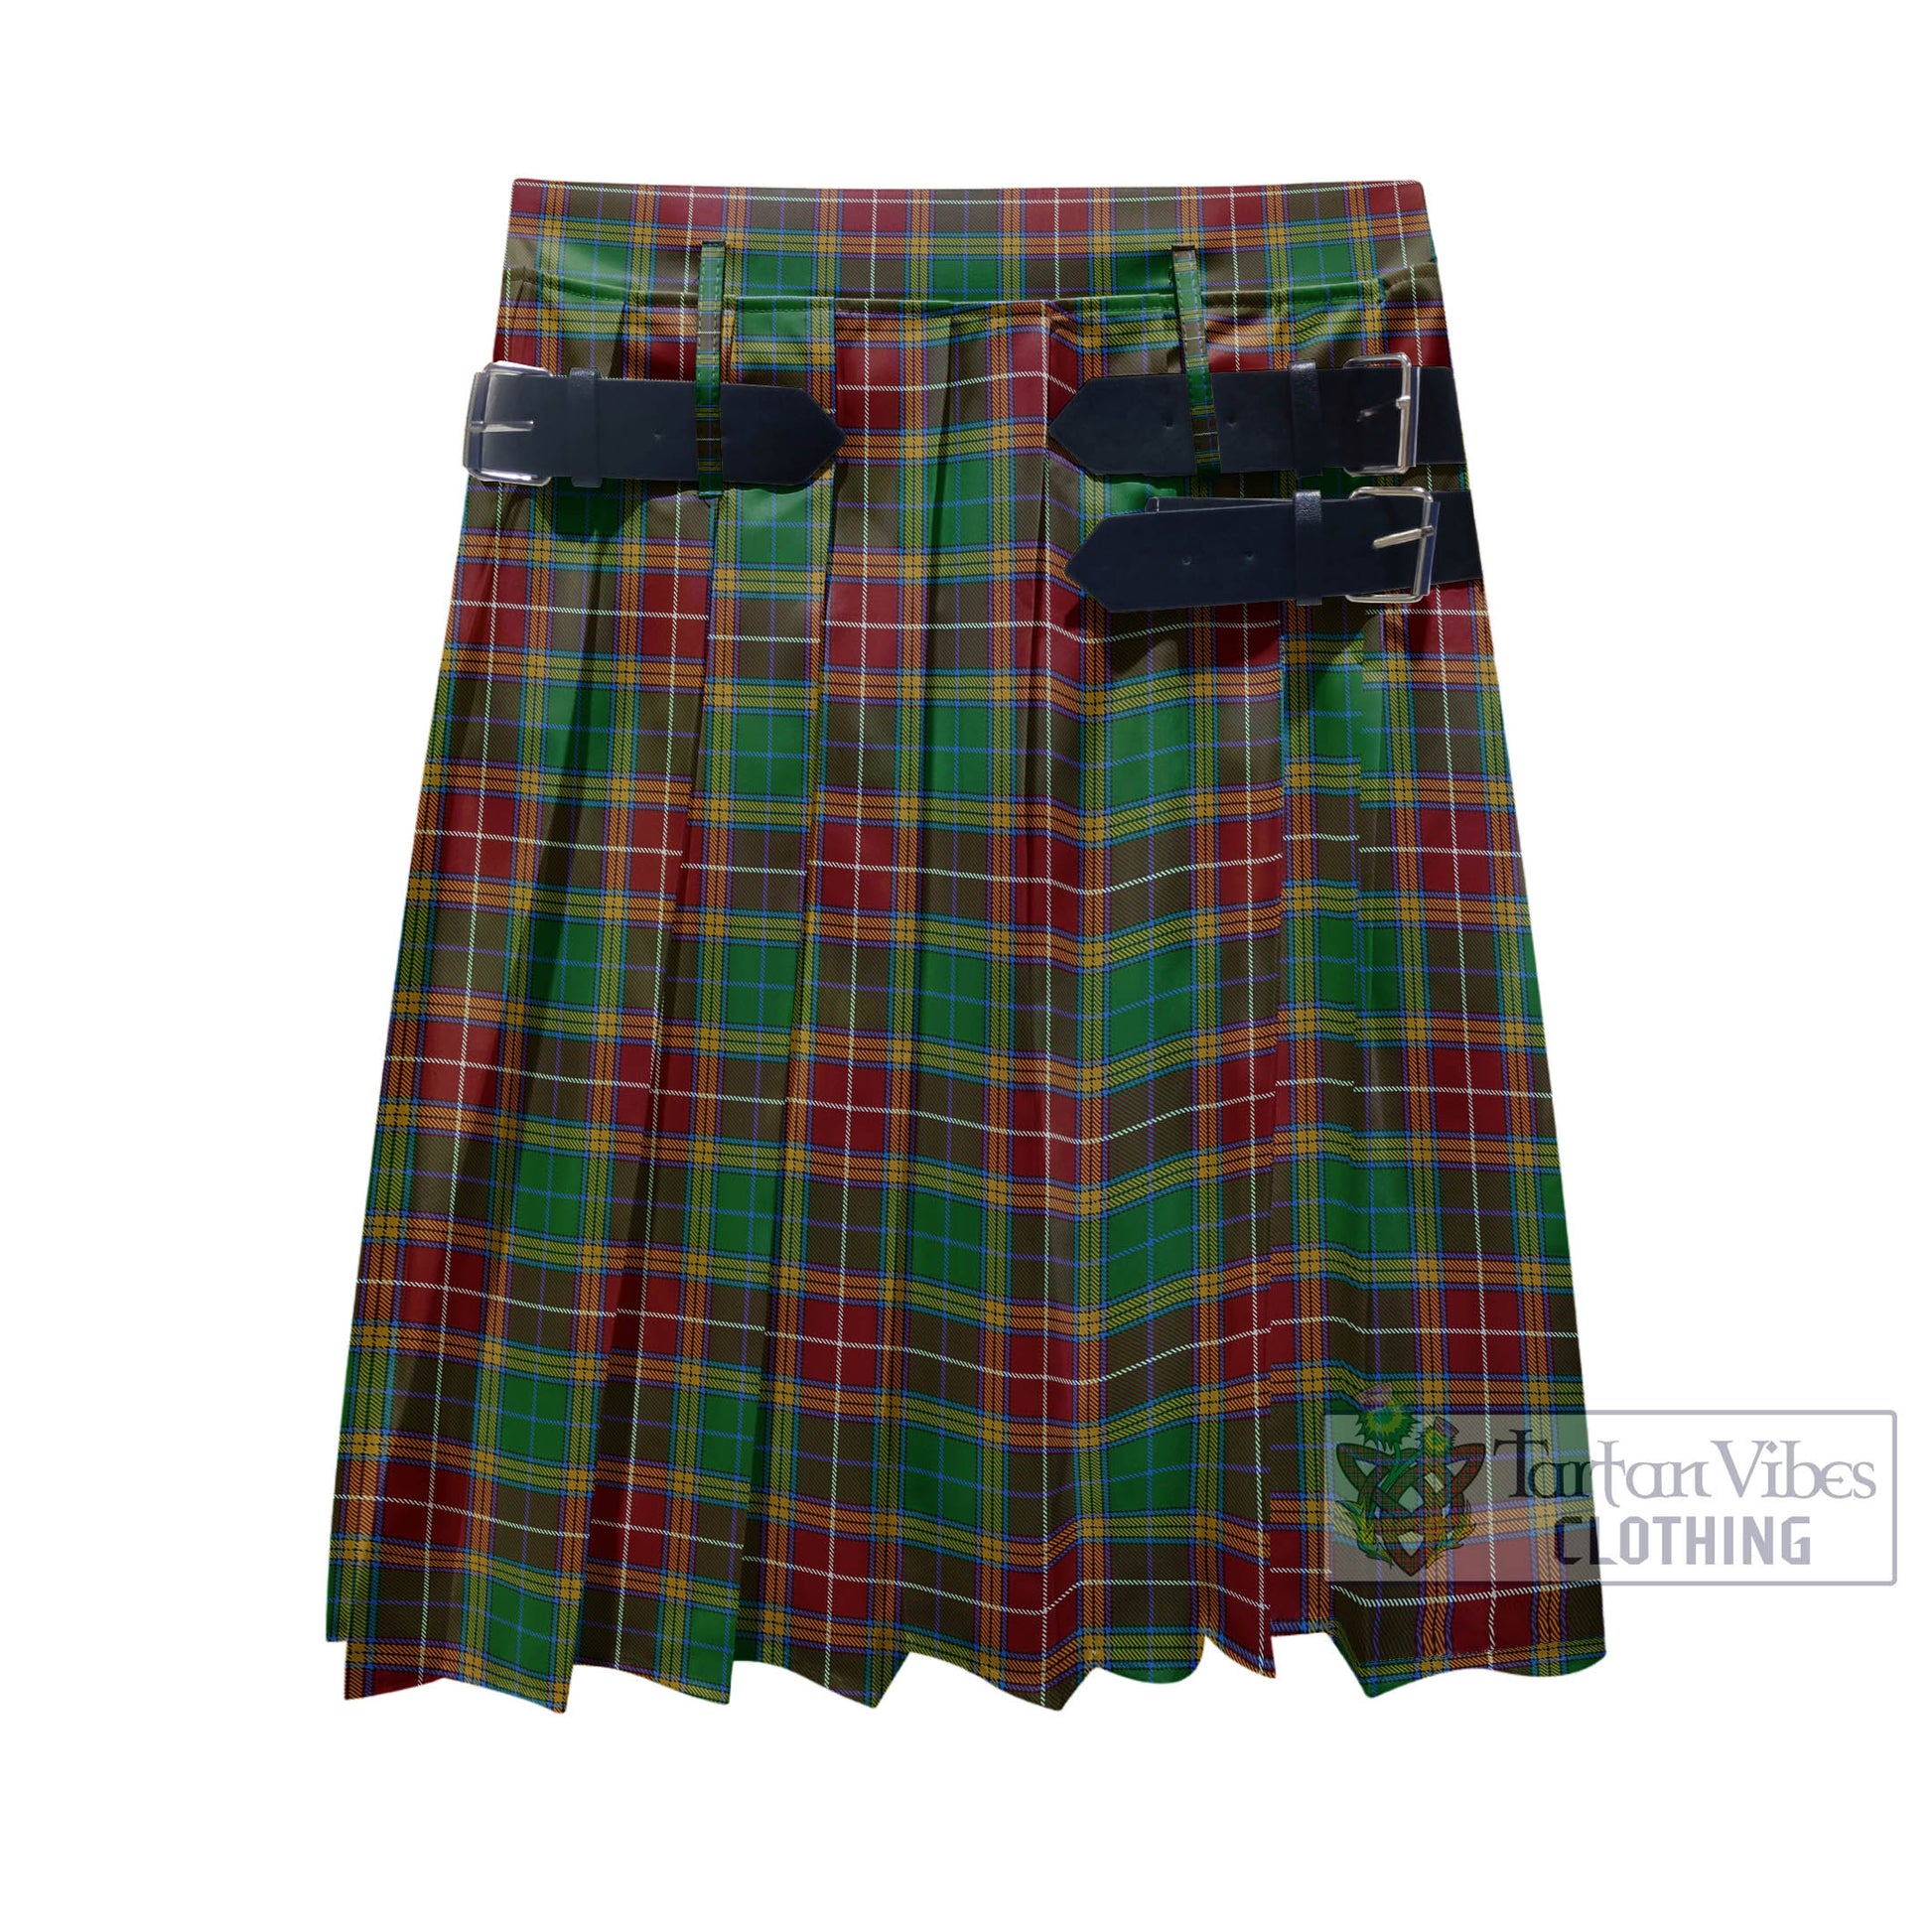 Tartan Vibes Clothing Baxter Tartan Men's Pleated Skirt - Fashion Casual Retro Scottish Style